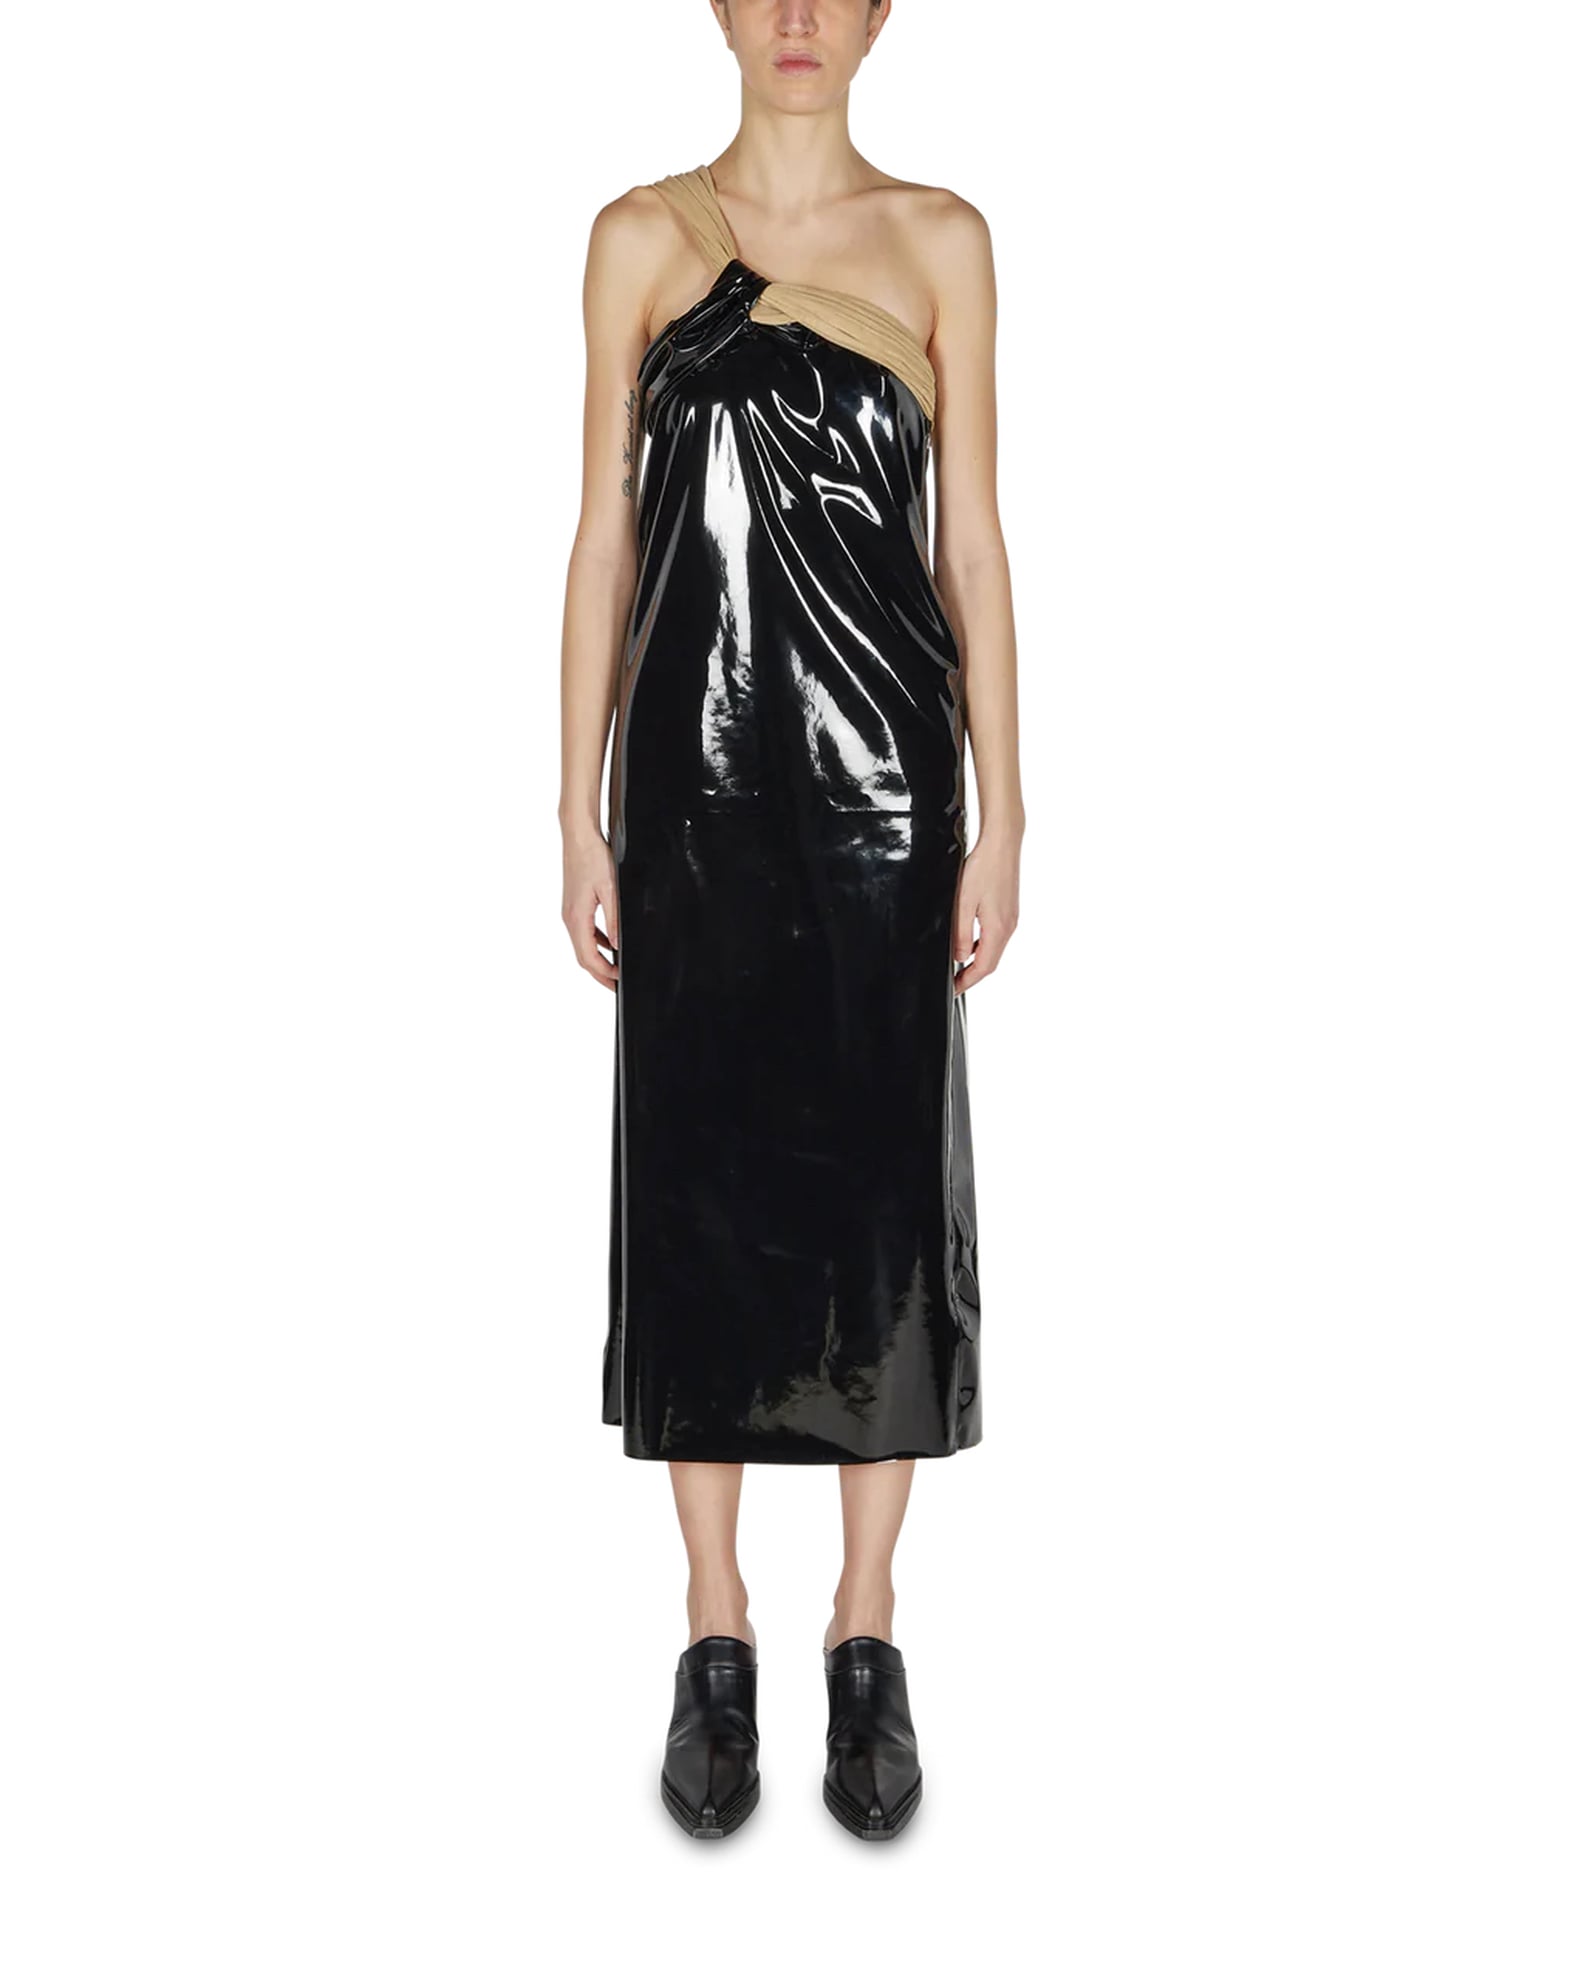 Kylie Jenner's Black PVC Dress From 1017 Alyx 9SM | POPSUGAR Fashion